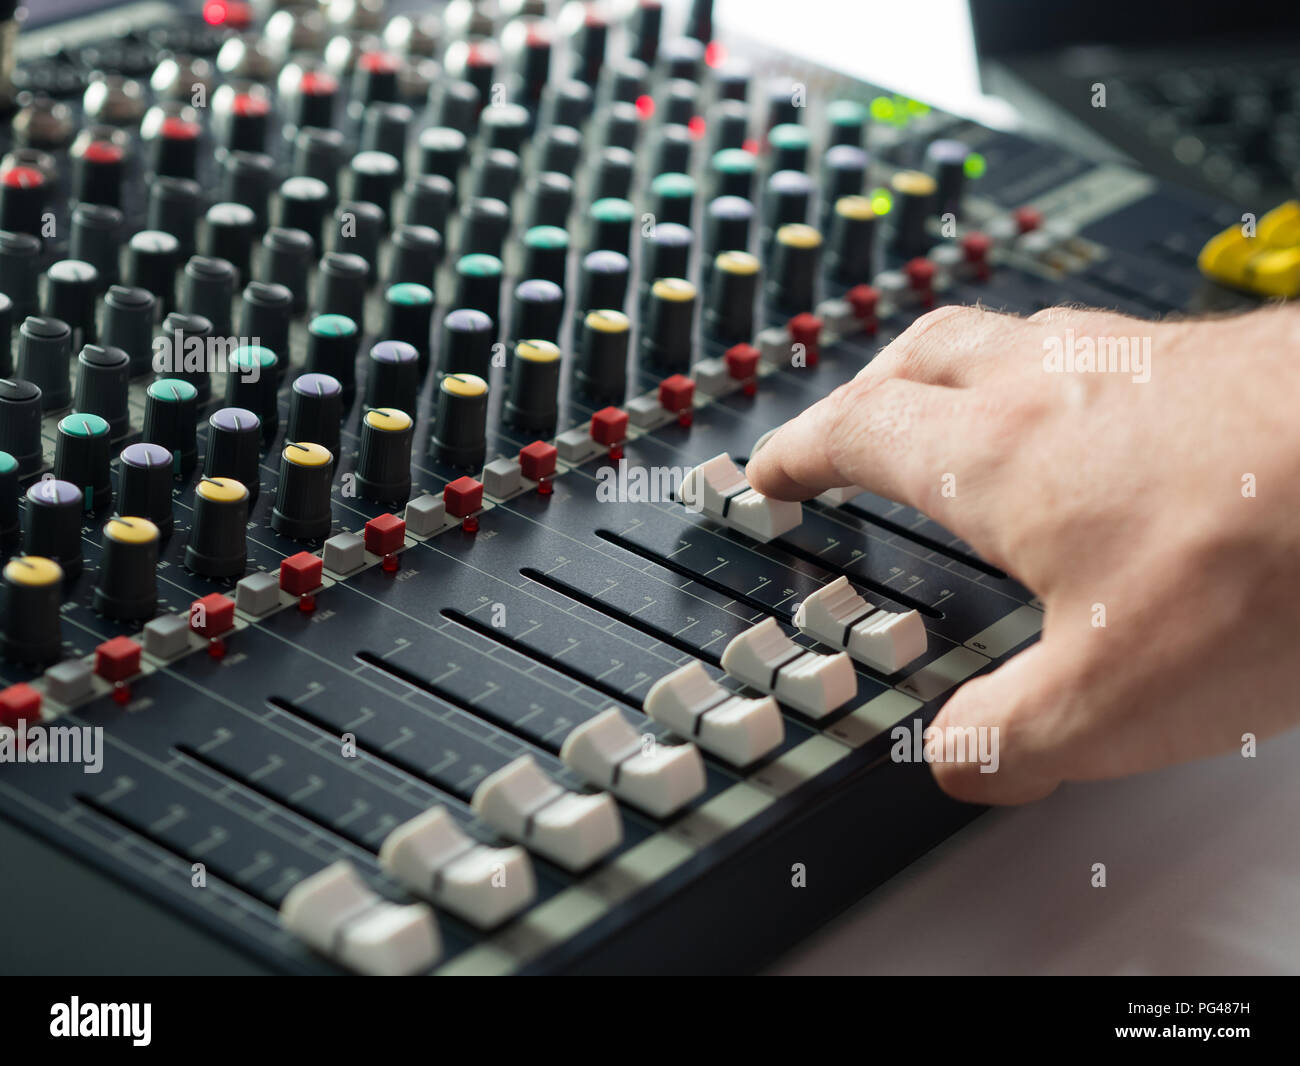 Dj mixing desk in music studio Stock Photo